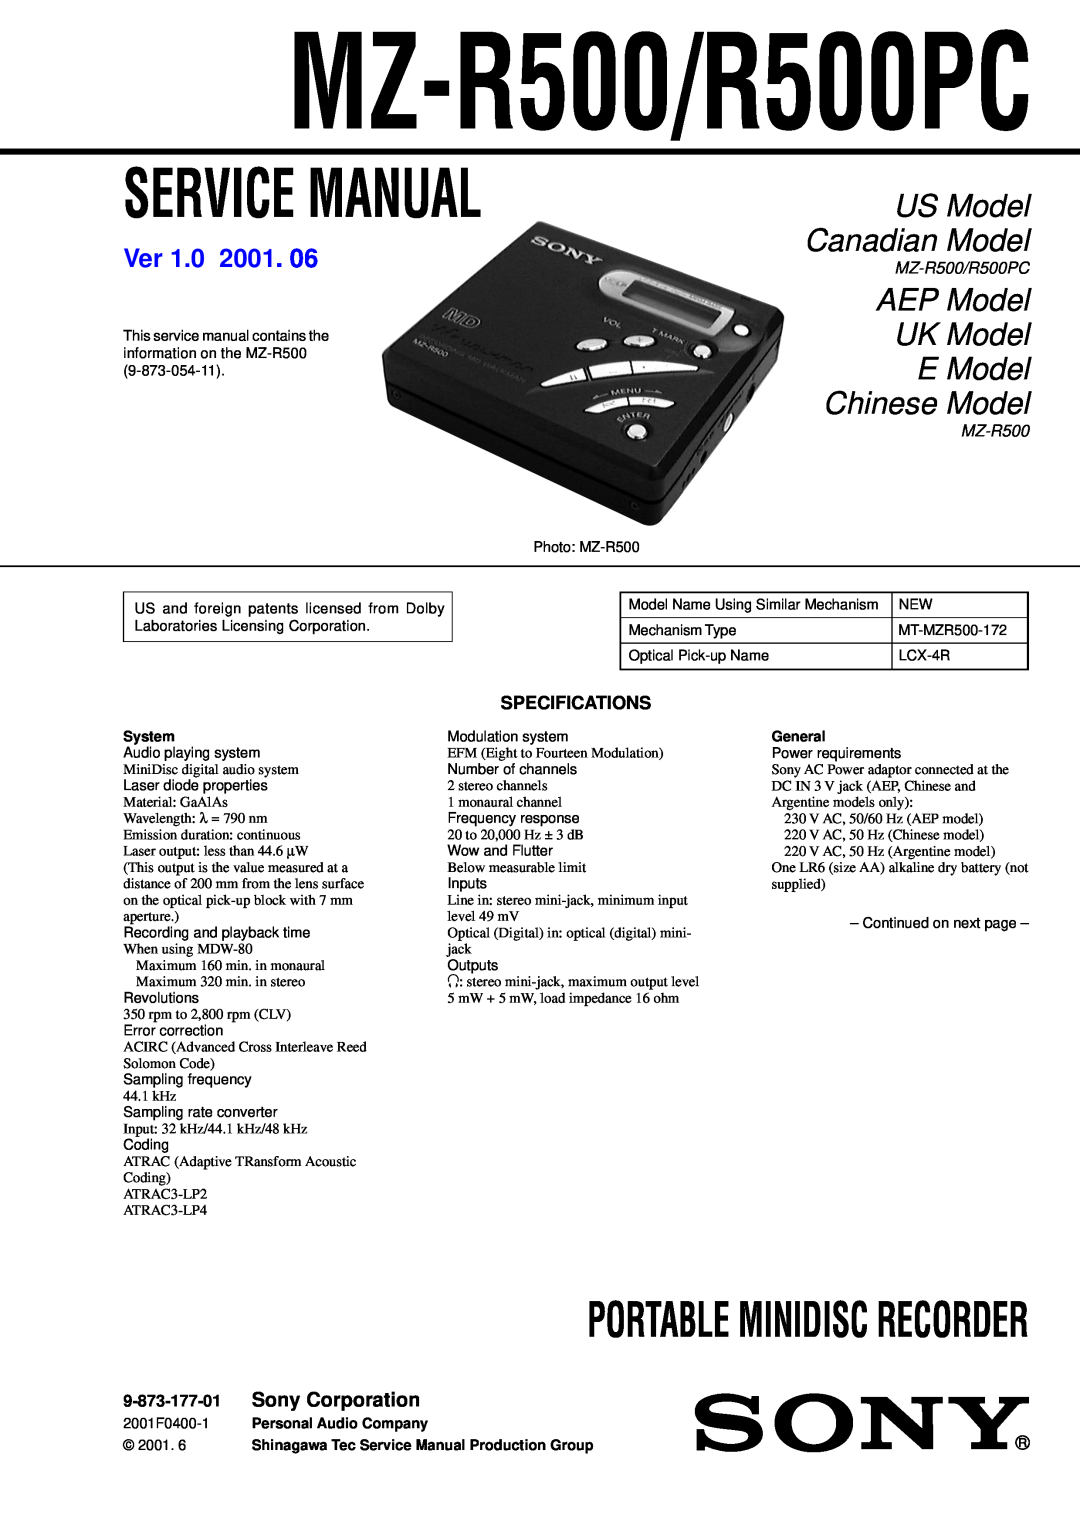 Sony service manual MZ-R500/R500PC, US Model Canadian Model, AEP Model UK Model E Model Chinese Model, Ver 